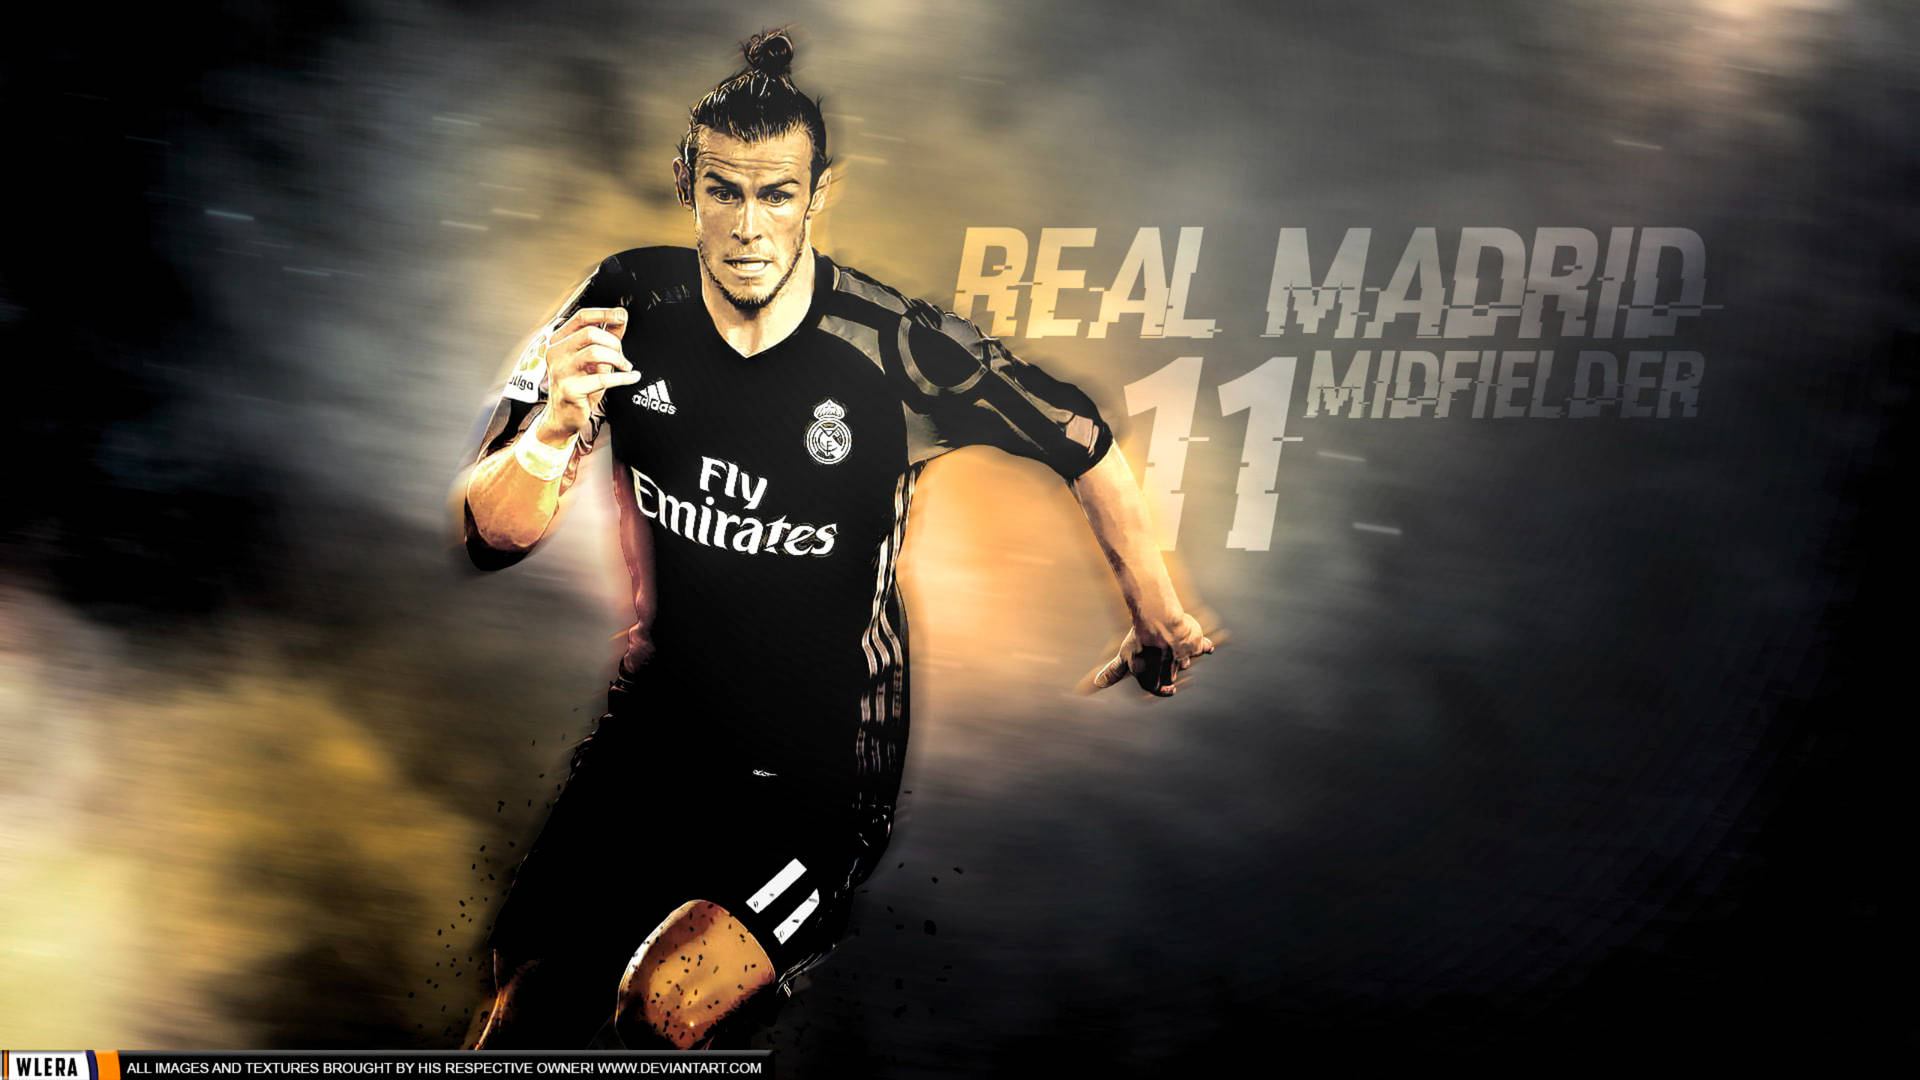 Gareth Bale Real Madrid Midfielder Poster Background